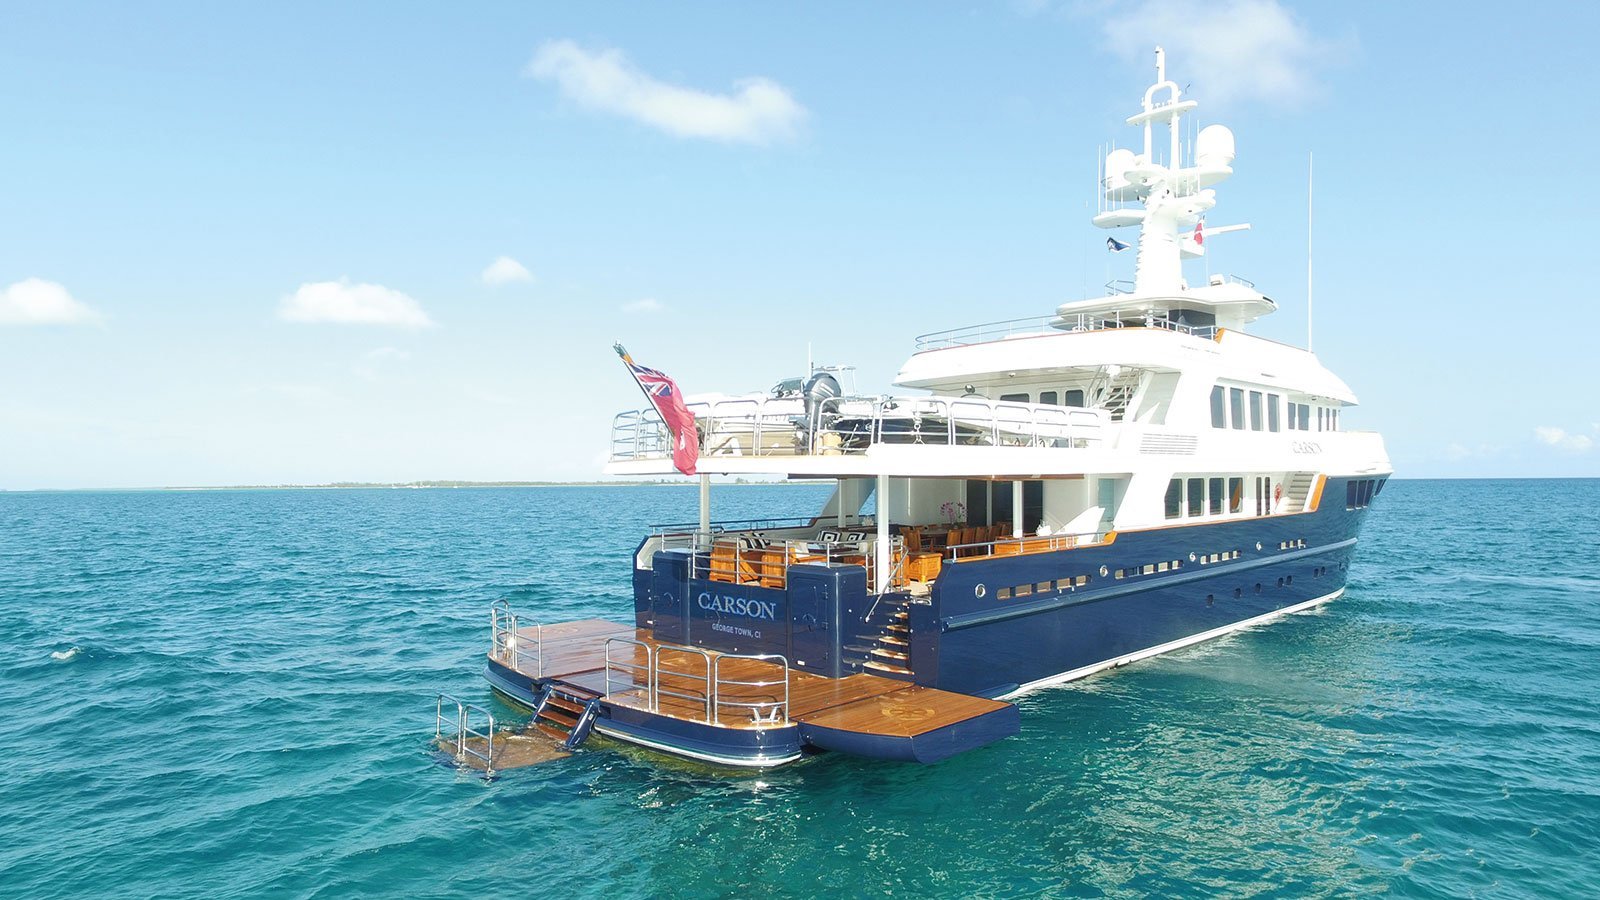 CARSON Yacht • Randy Ringhaver $20M Superyacht • Newcastle Marine • 2015